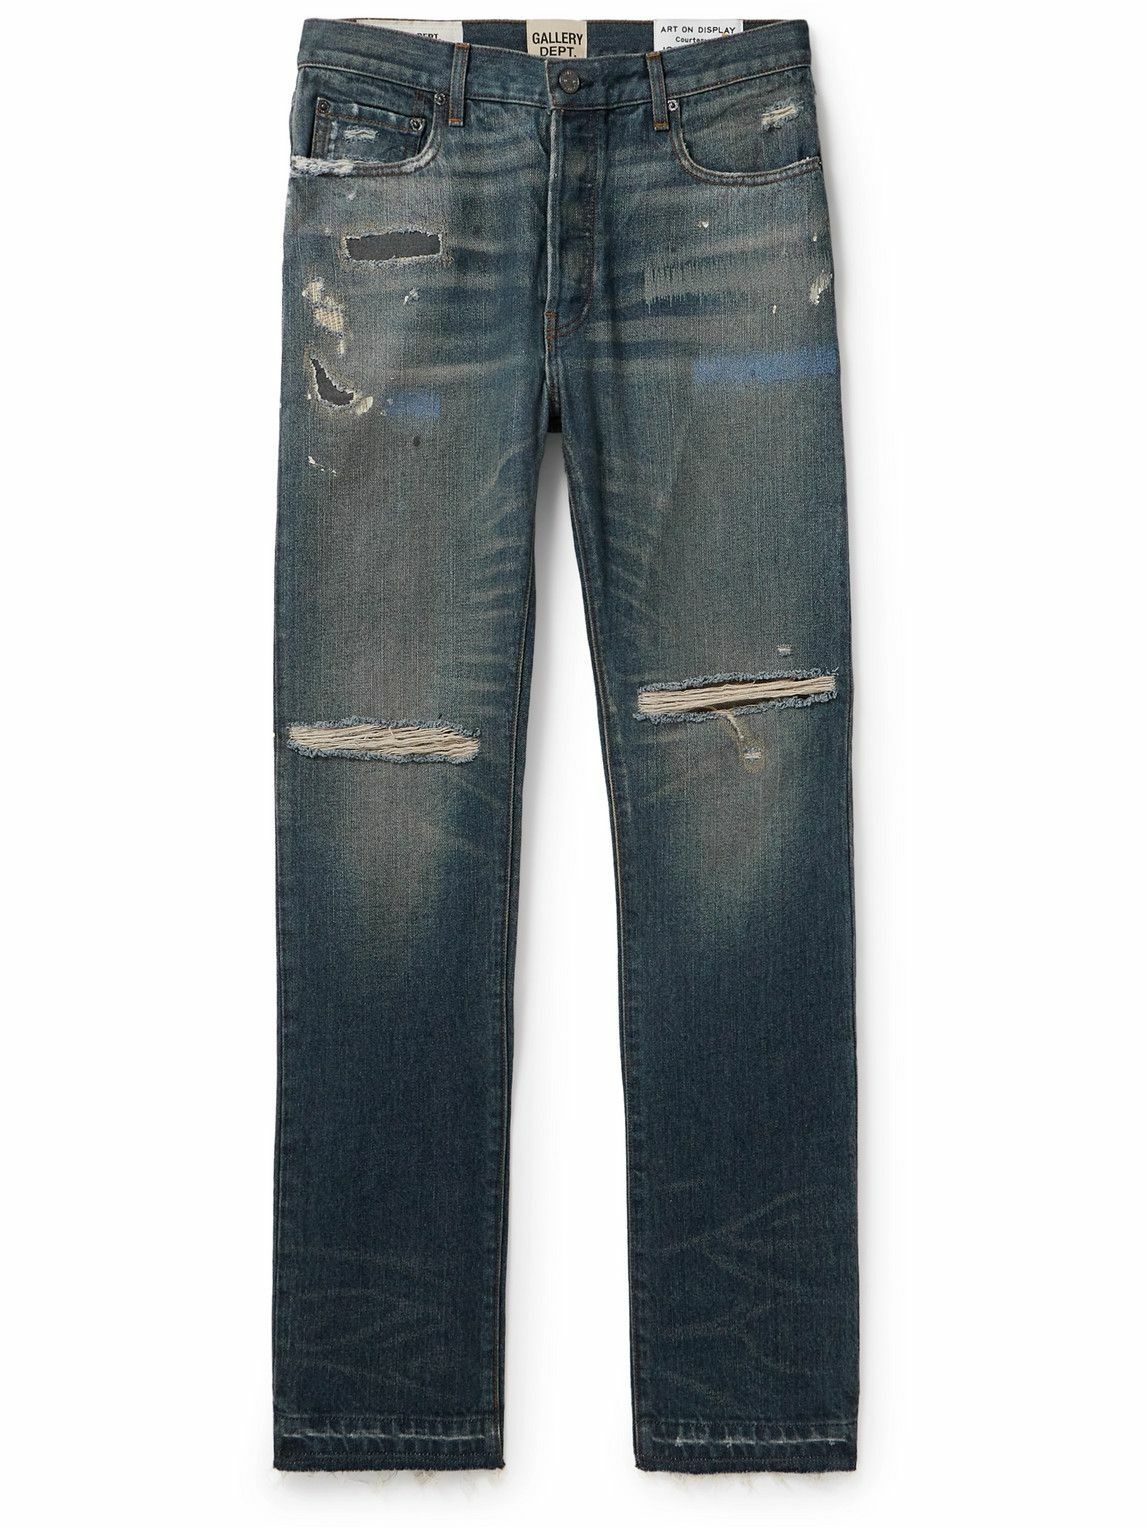 Photo: Gallery Dept. - Starr 5001 Straight-Leg Paint-Splattered Distressed Jeans - Black